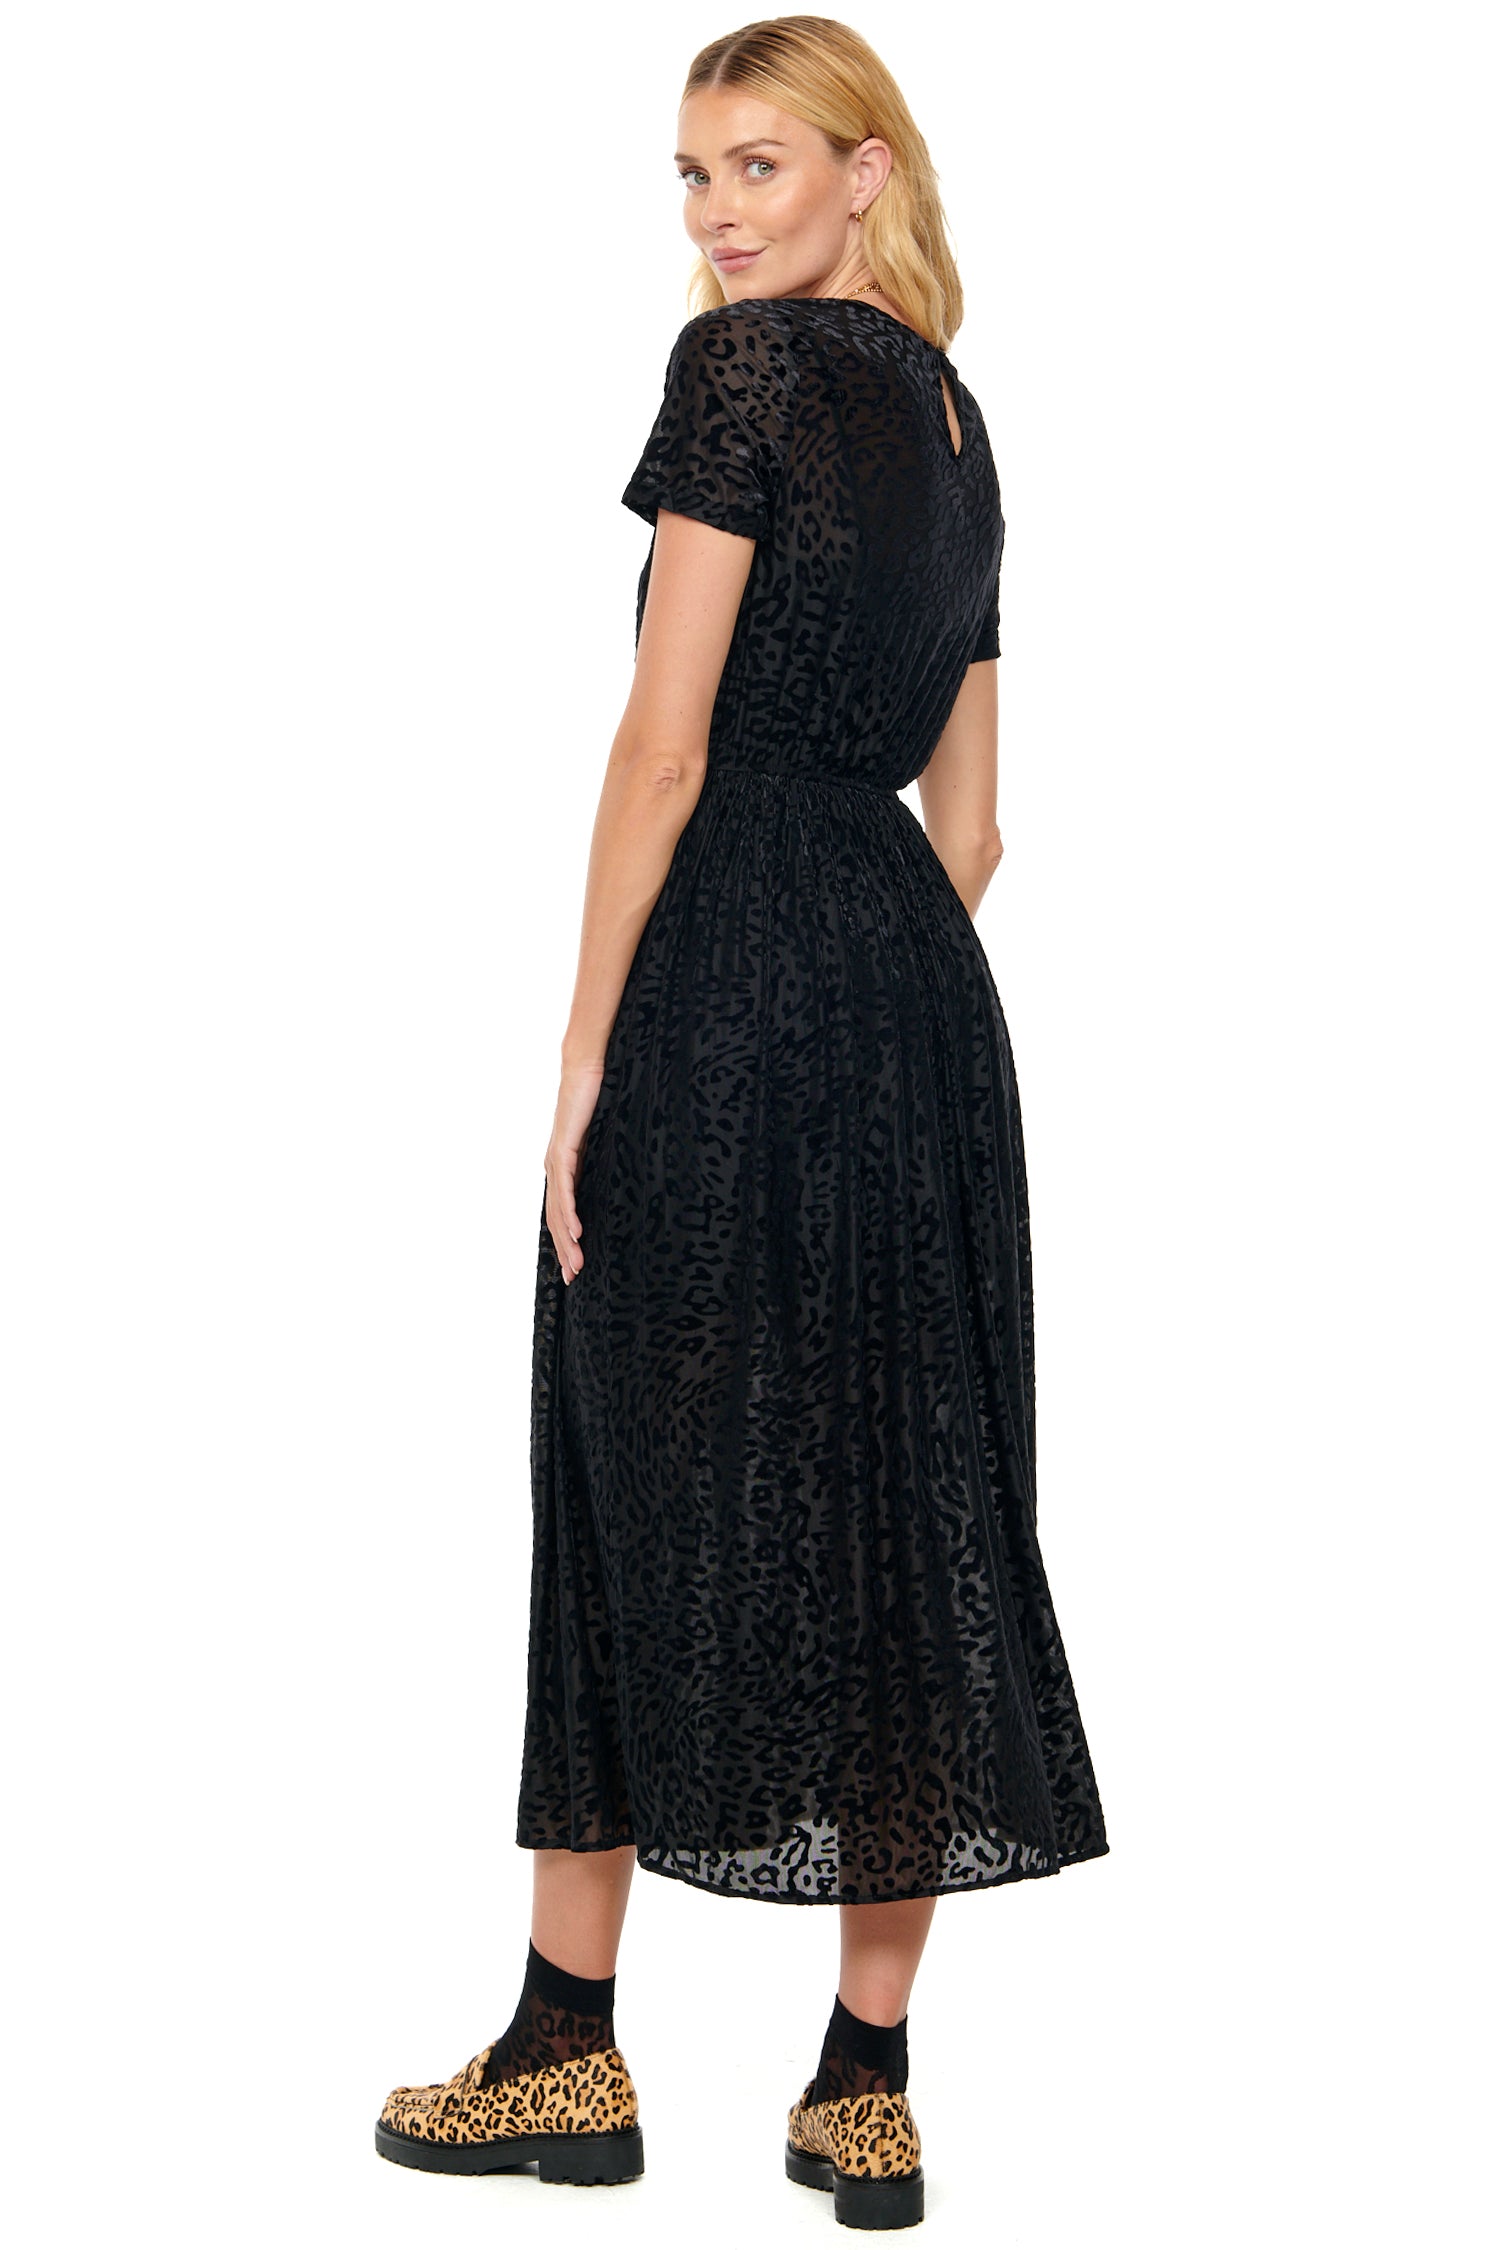 Model wearing Black Animal Devoree Dress standing facing away from the camera